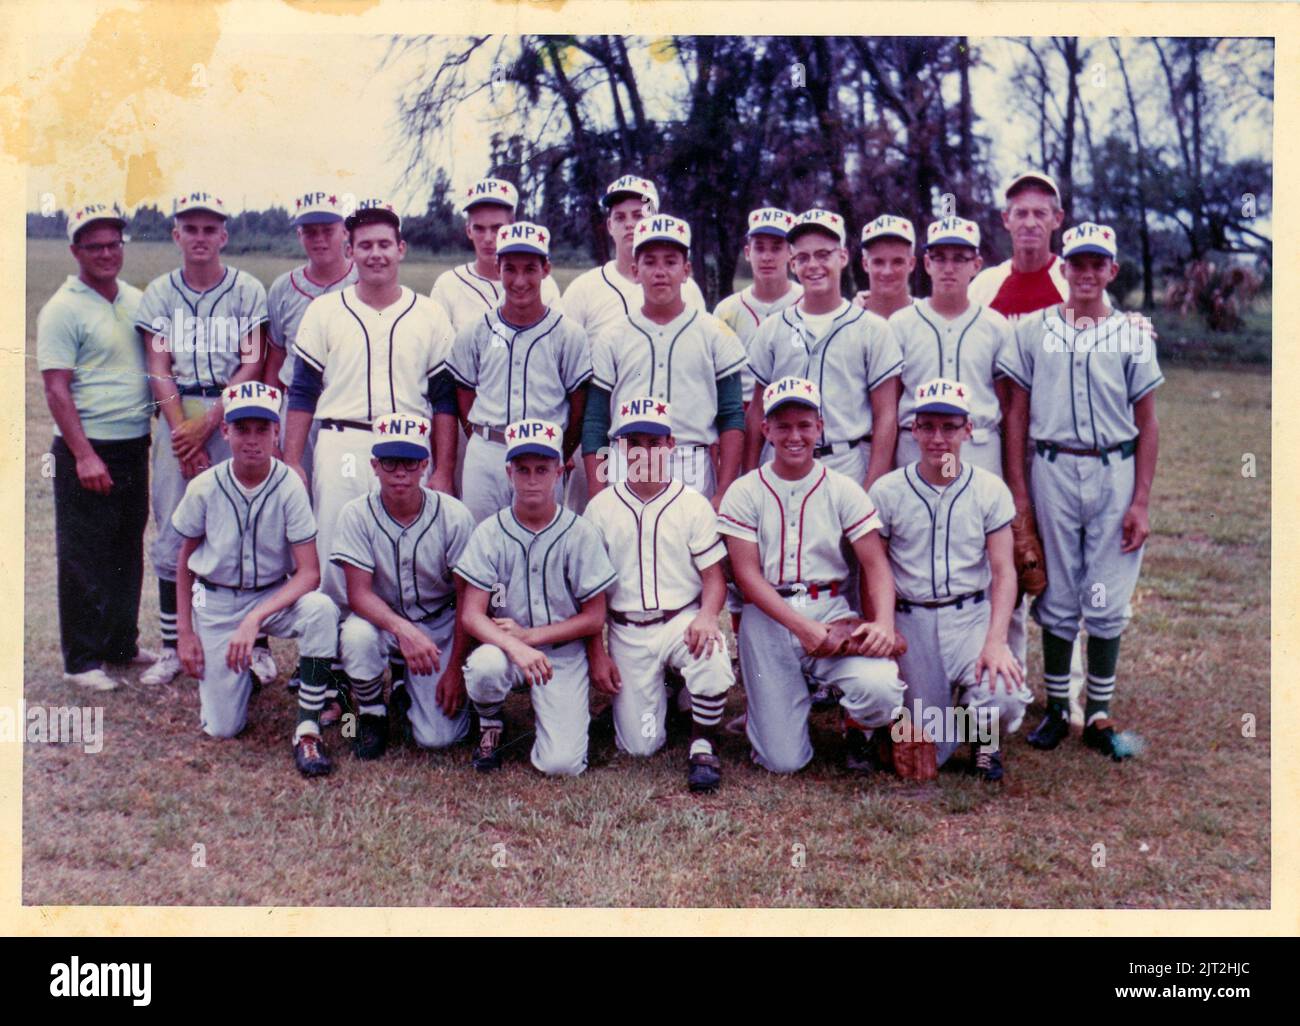 North Palamino Pony League All-Star Team Photo, 1963, Tampa, FL, USA Stock Photo